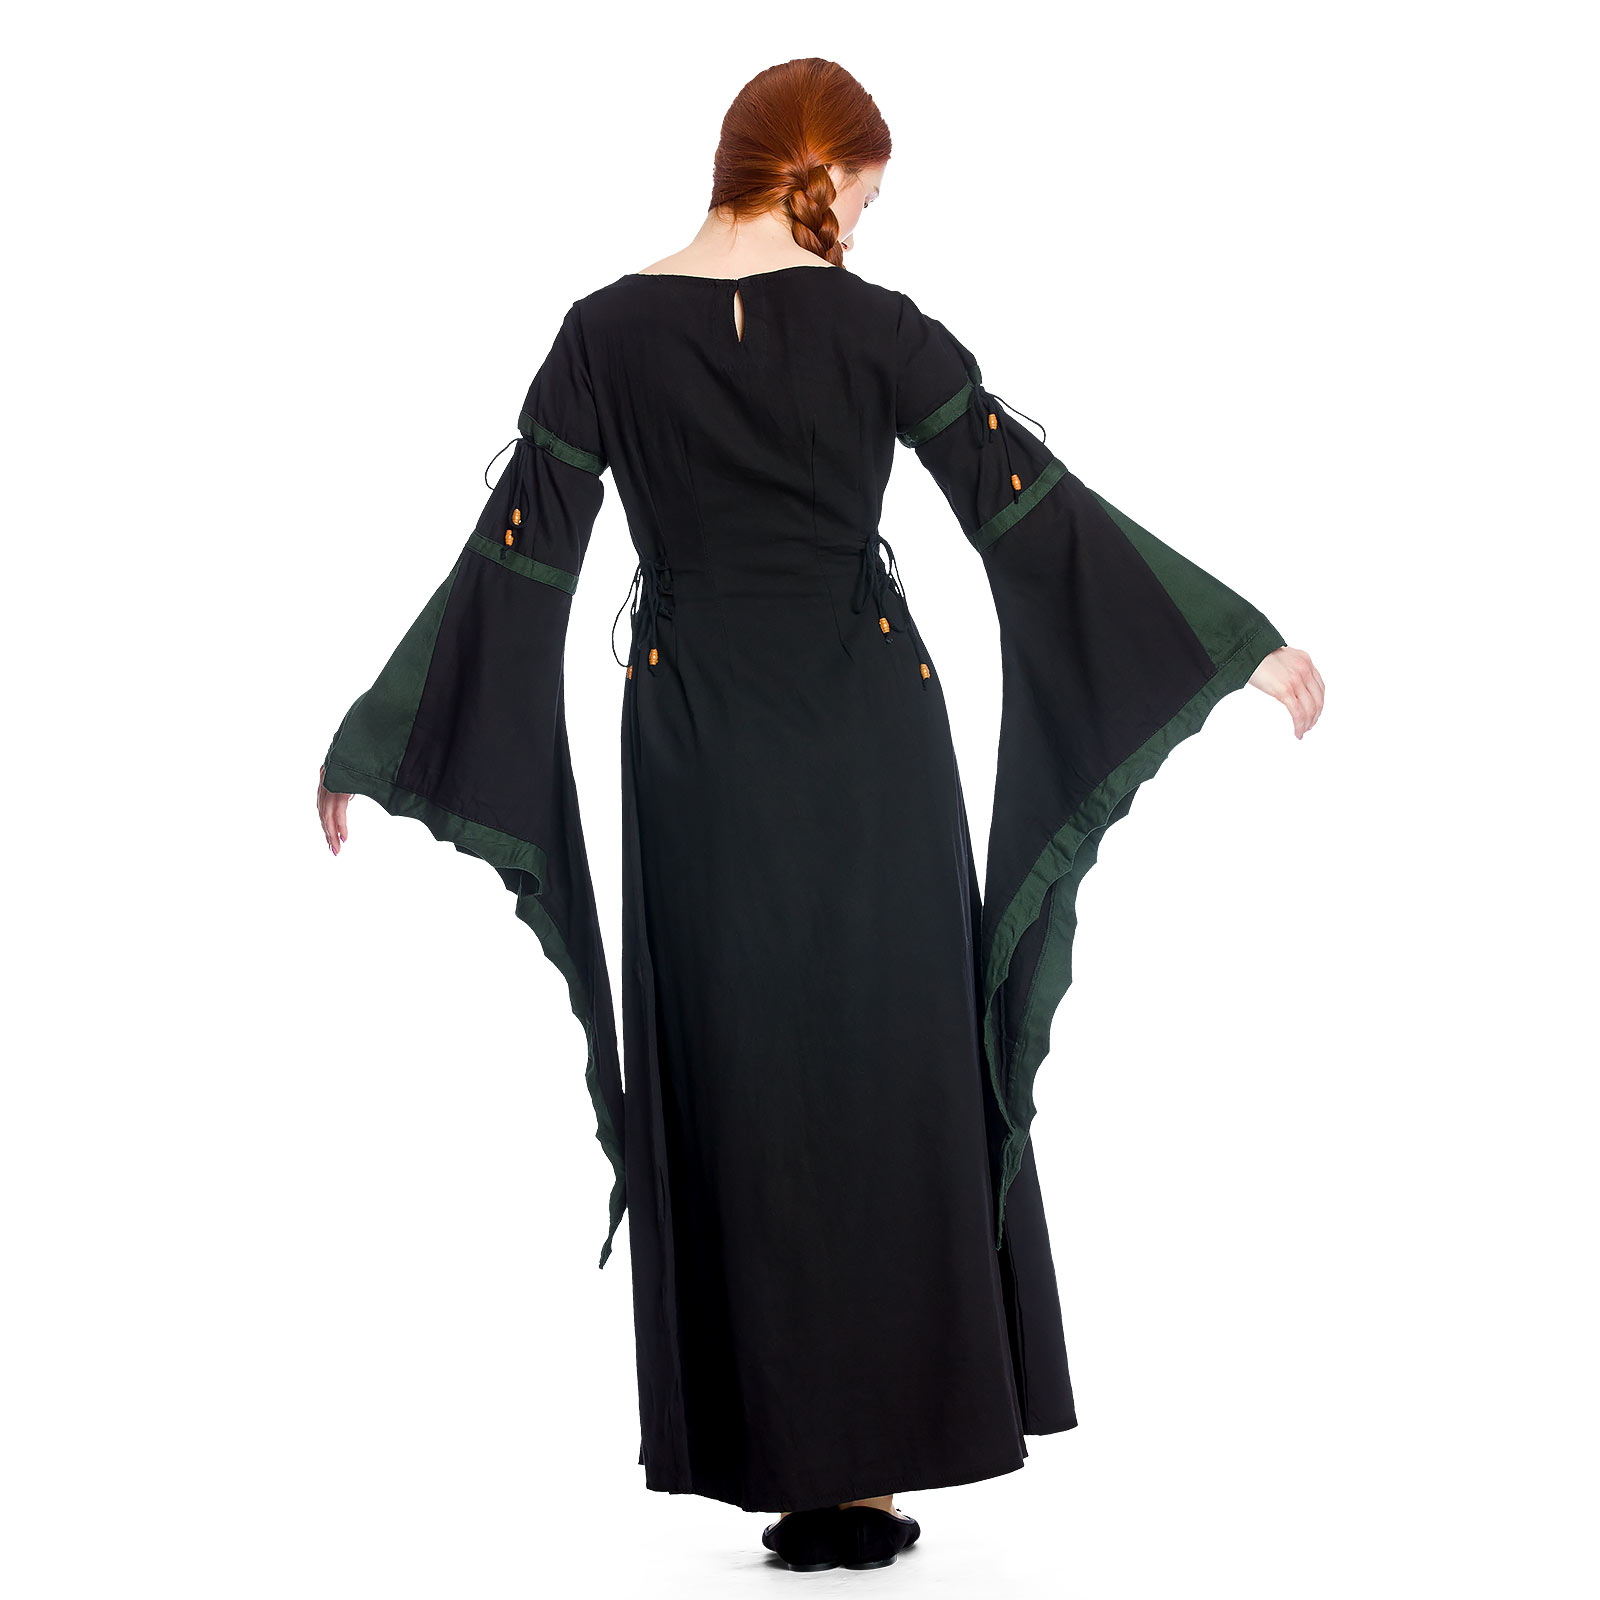 Leona - Medieval Dress Black-Green